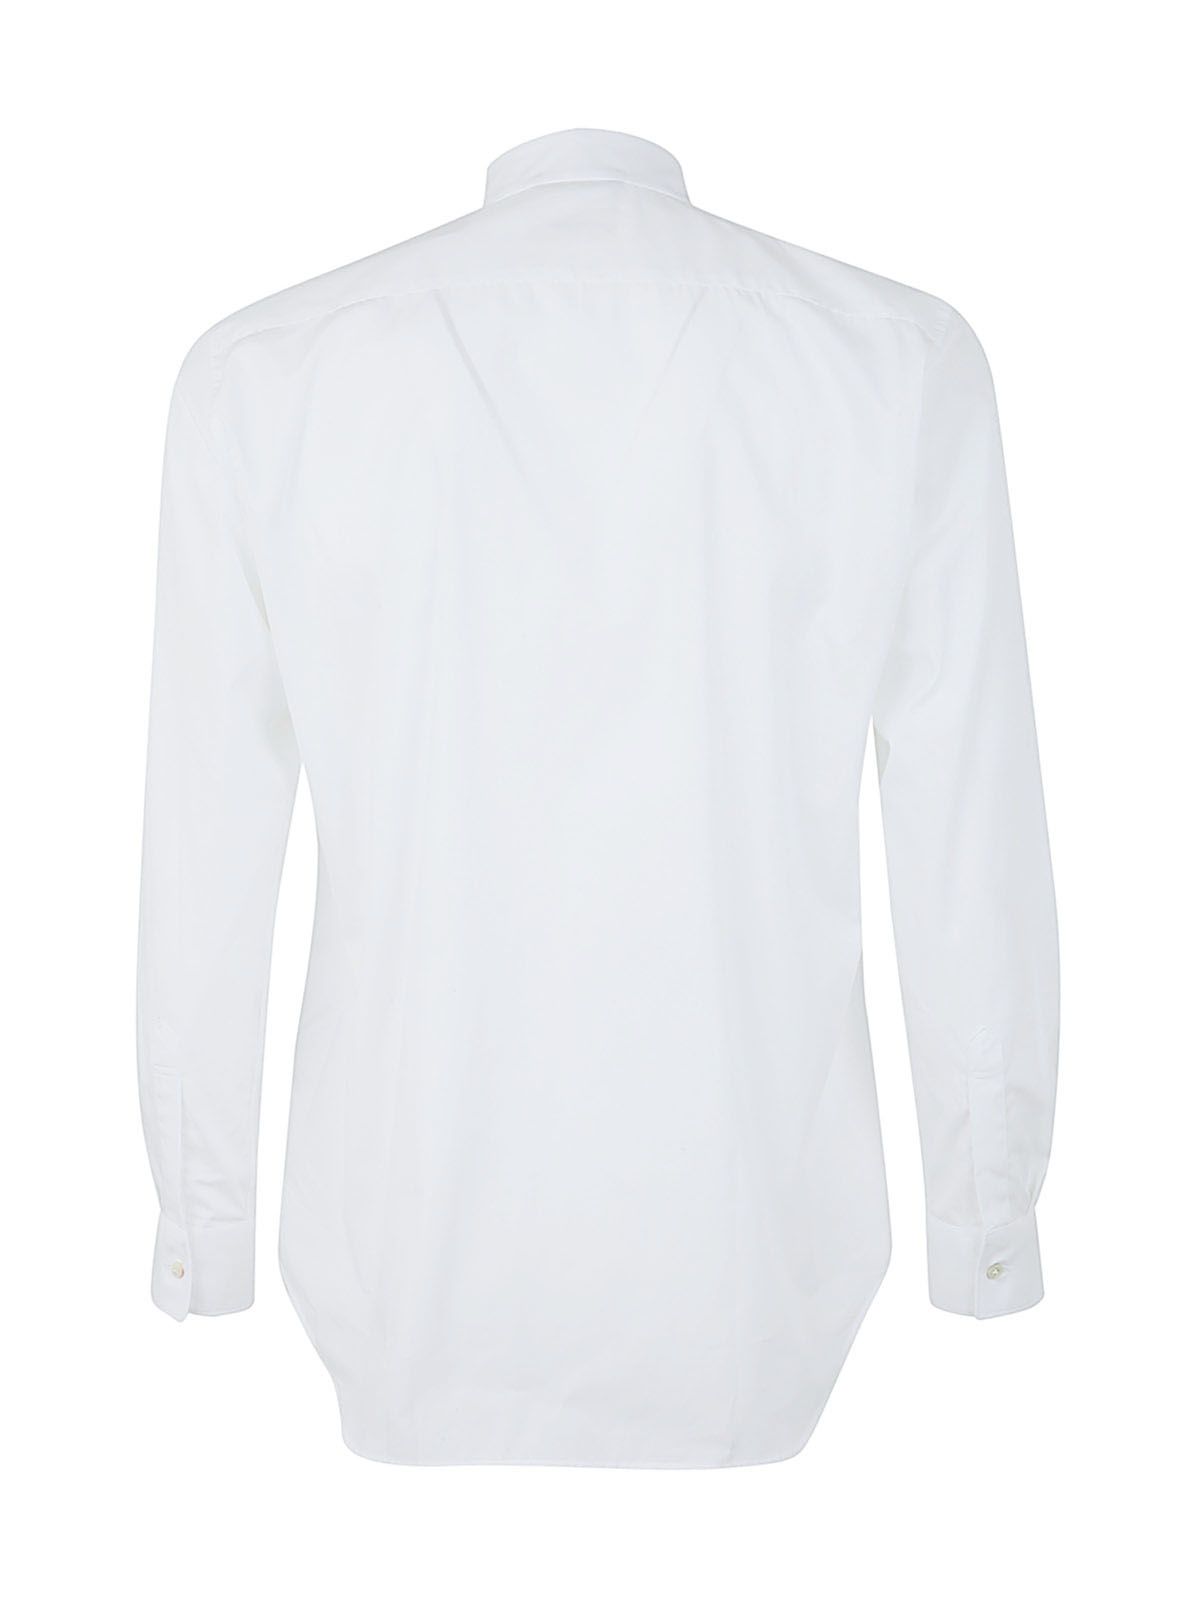 Shop Tintoria Mattei Men's Cotton Collar Shirt